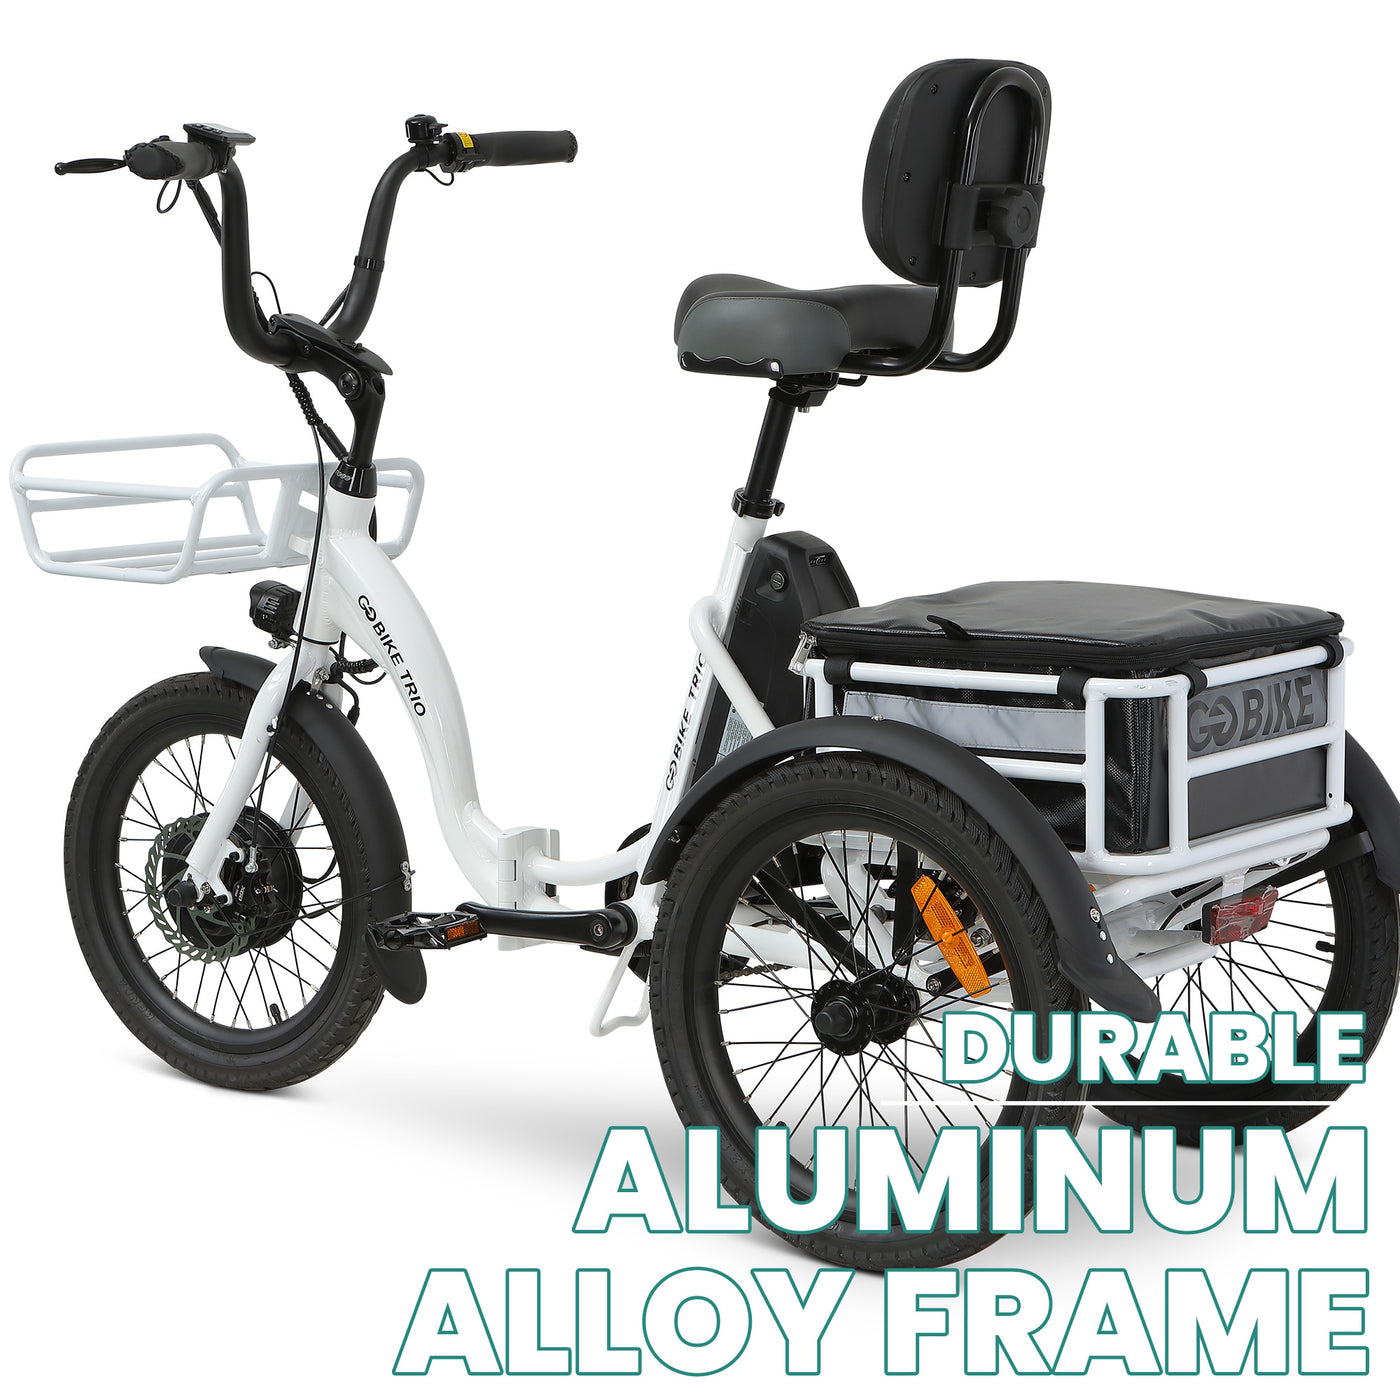 TRIO Portable Electric Bicycle - White / Black Frame